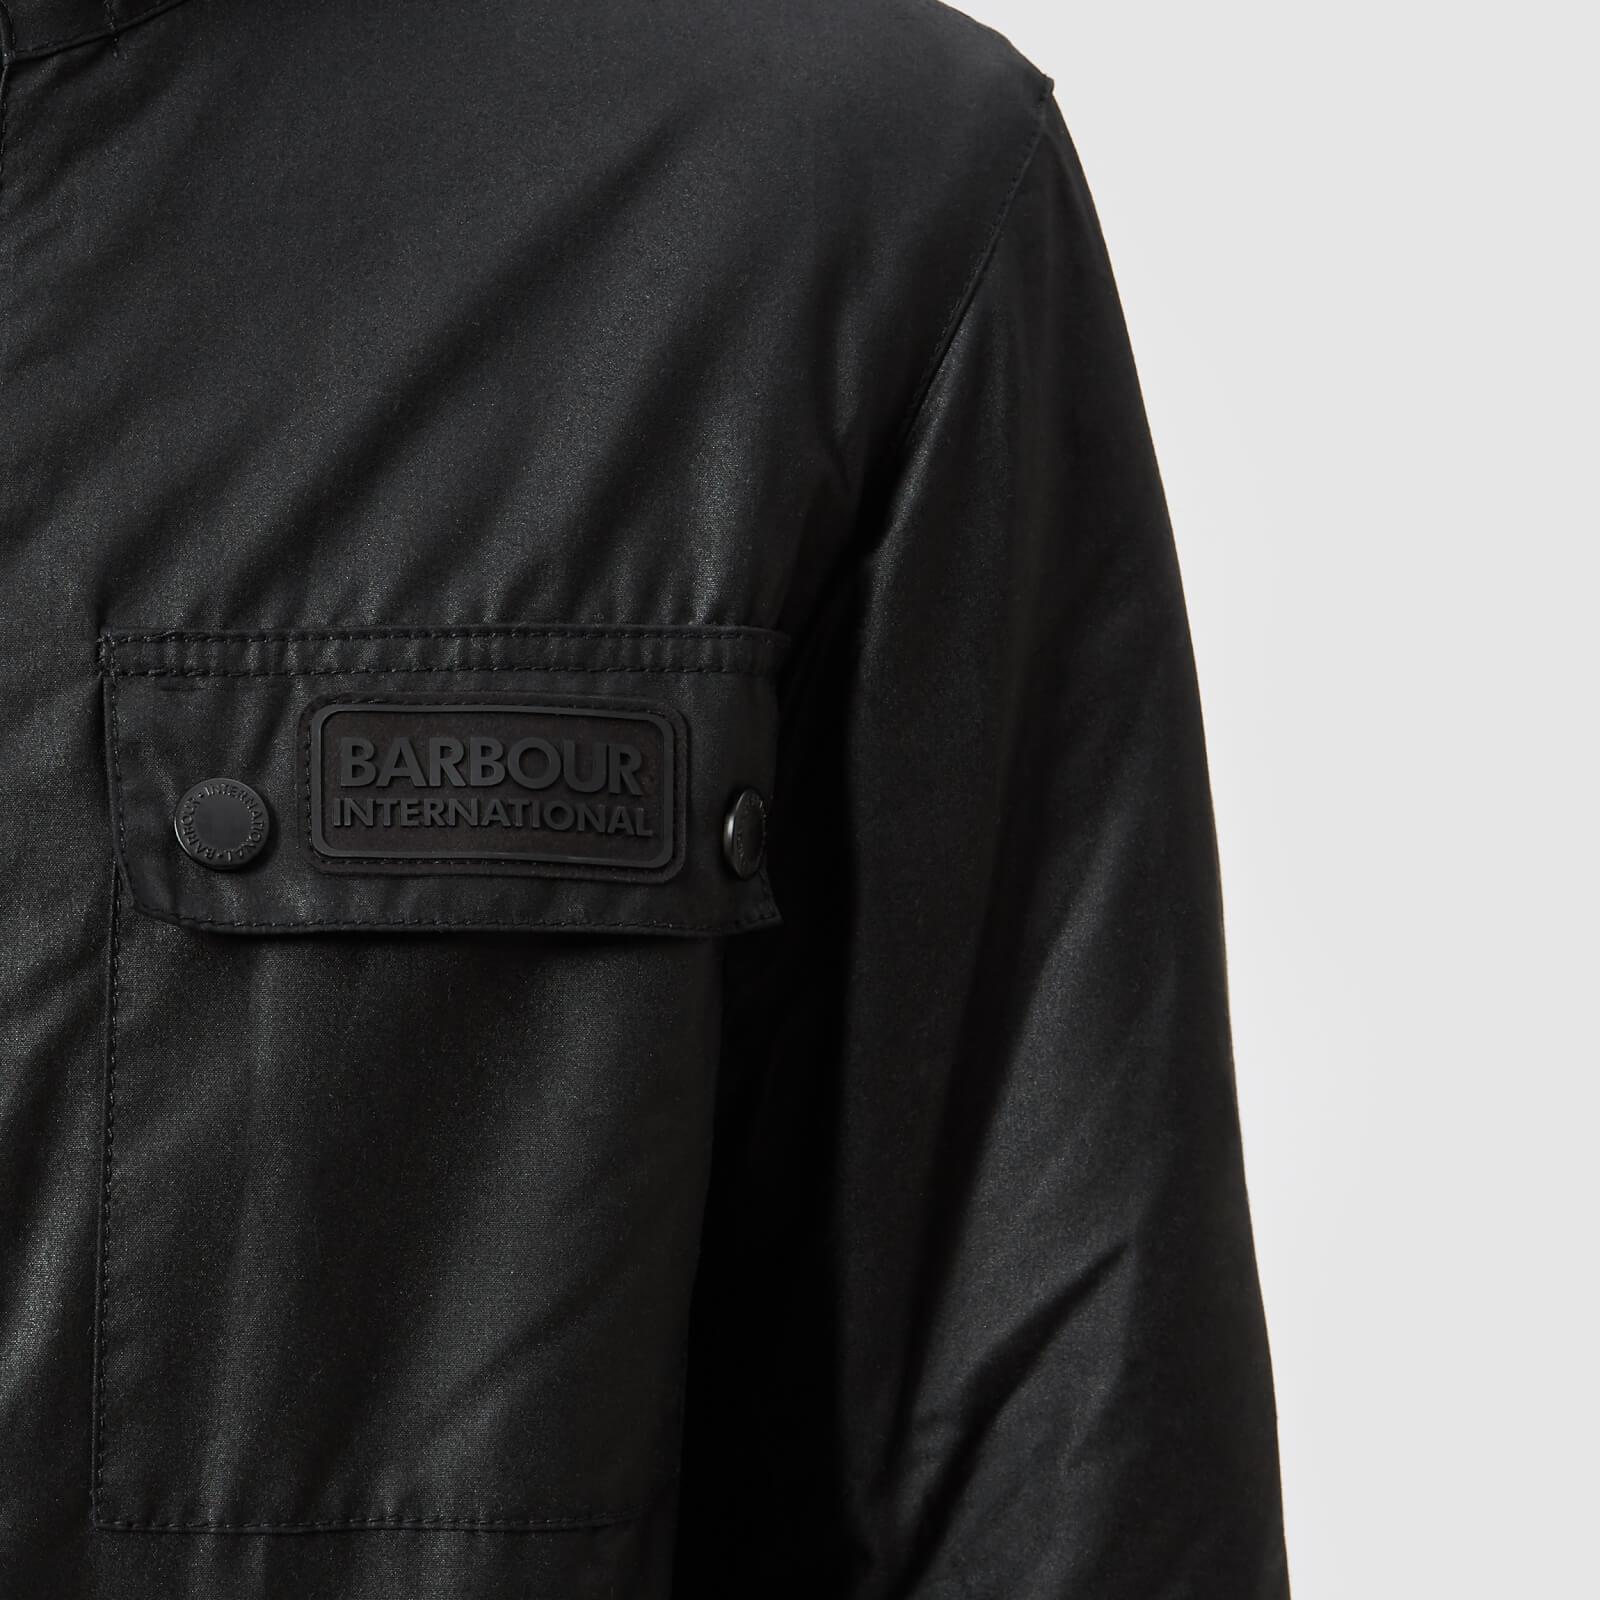 barbour international imboard wax jacket